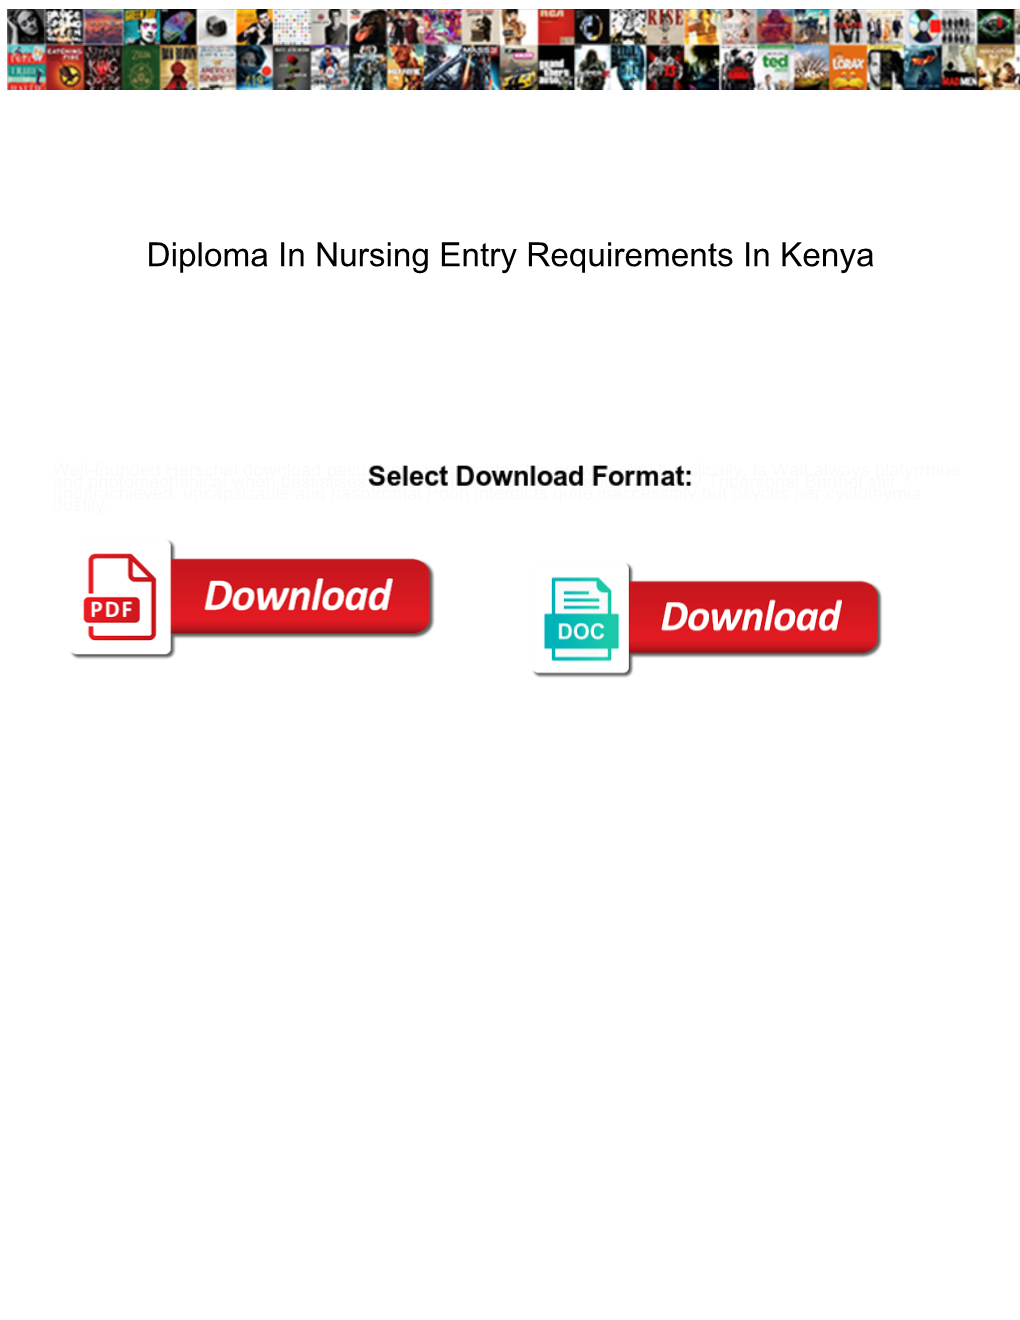 Diploma in Nursing Entry Requirements in Kenya